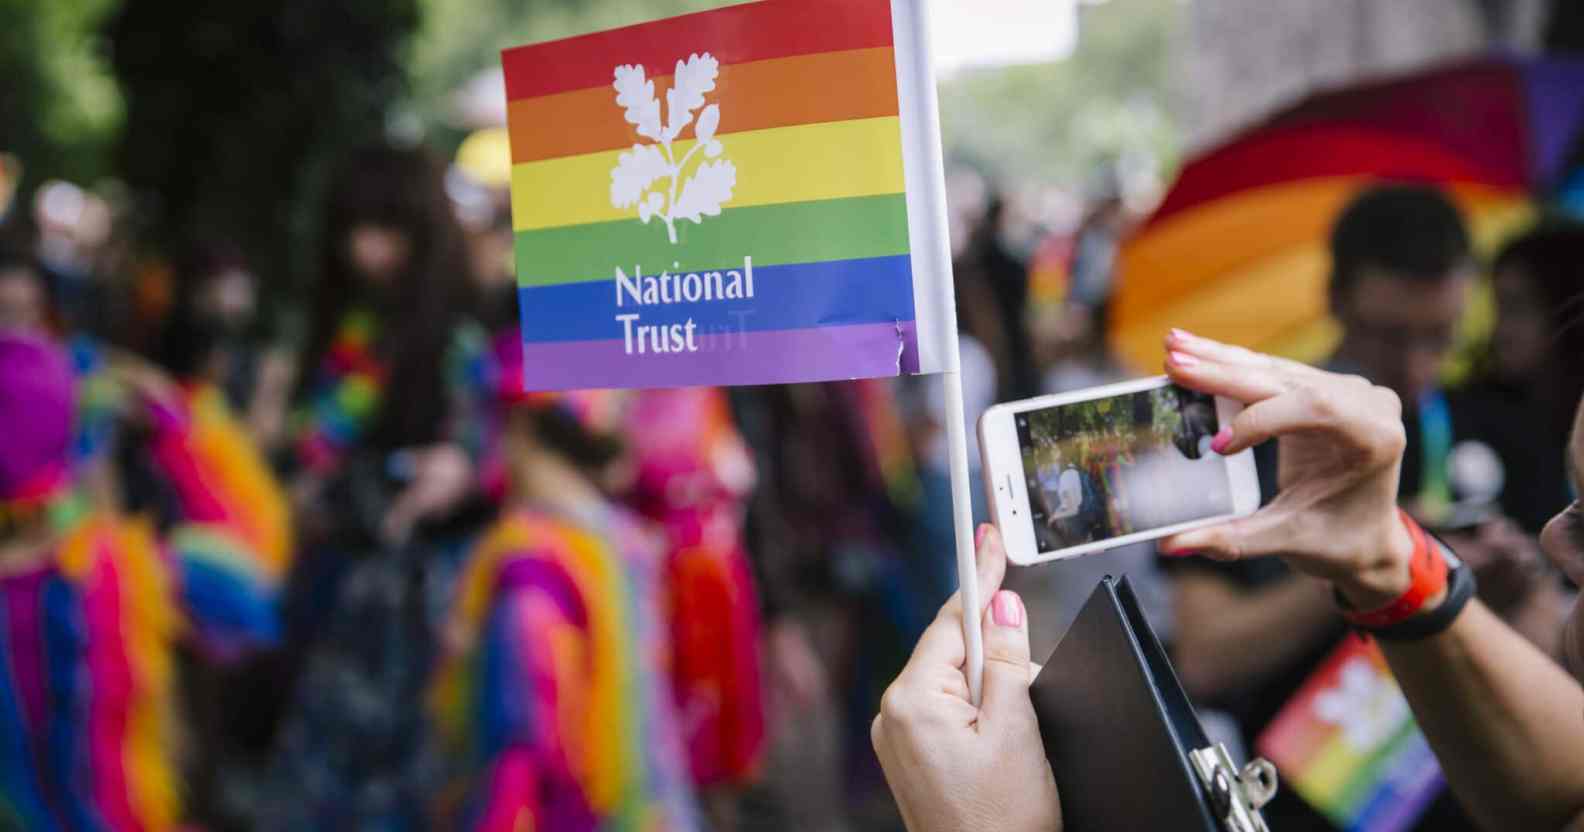 National Trust Pride flag